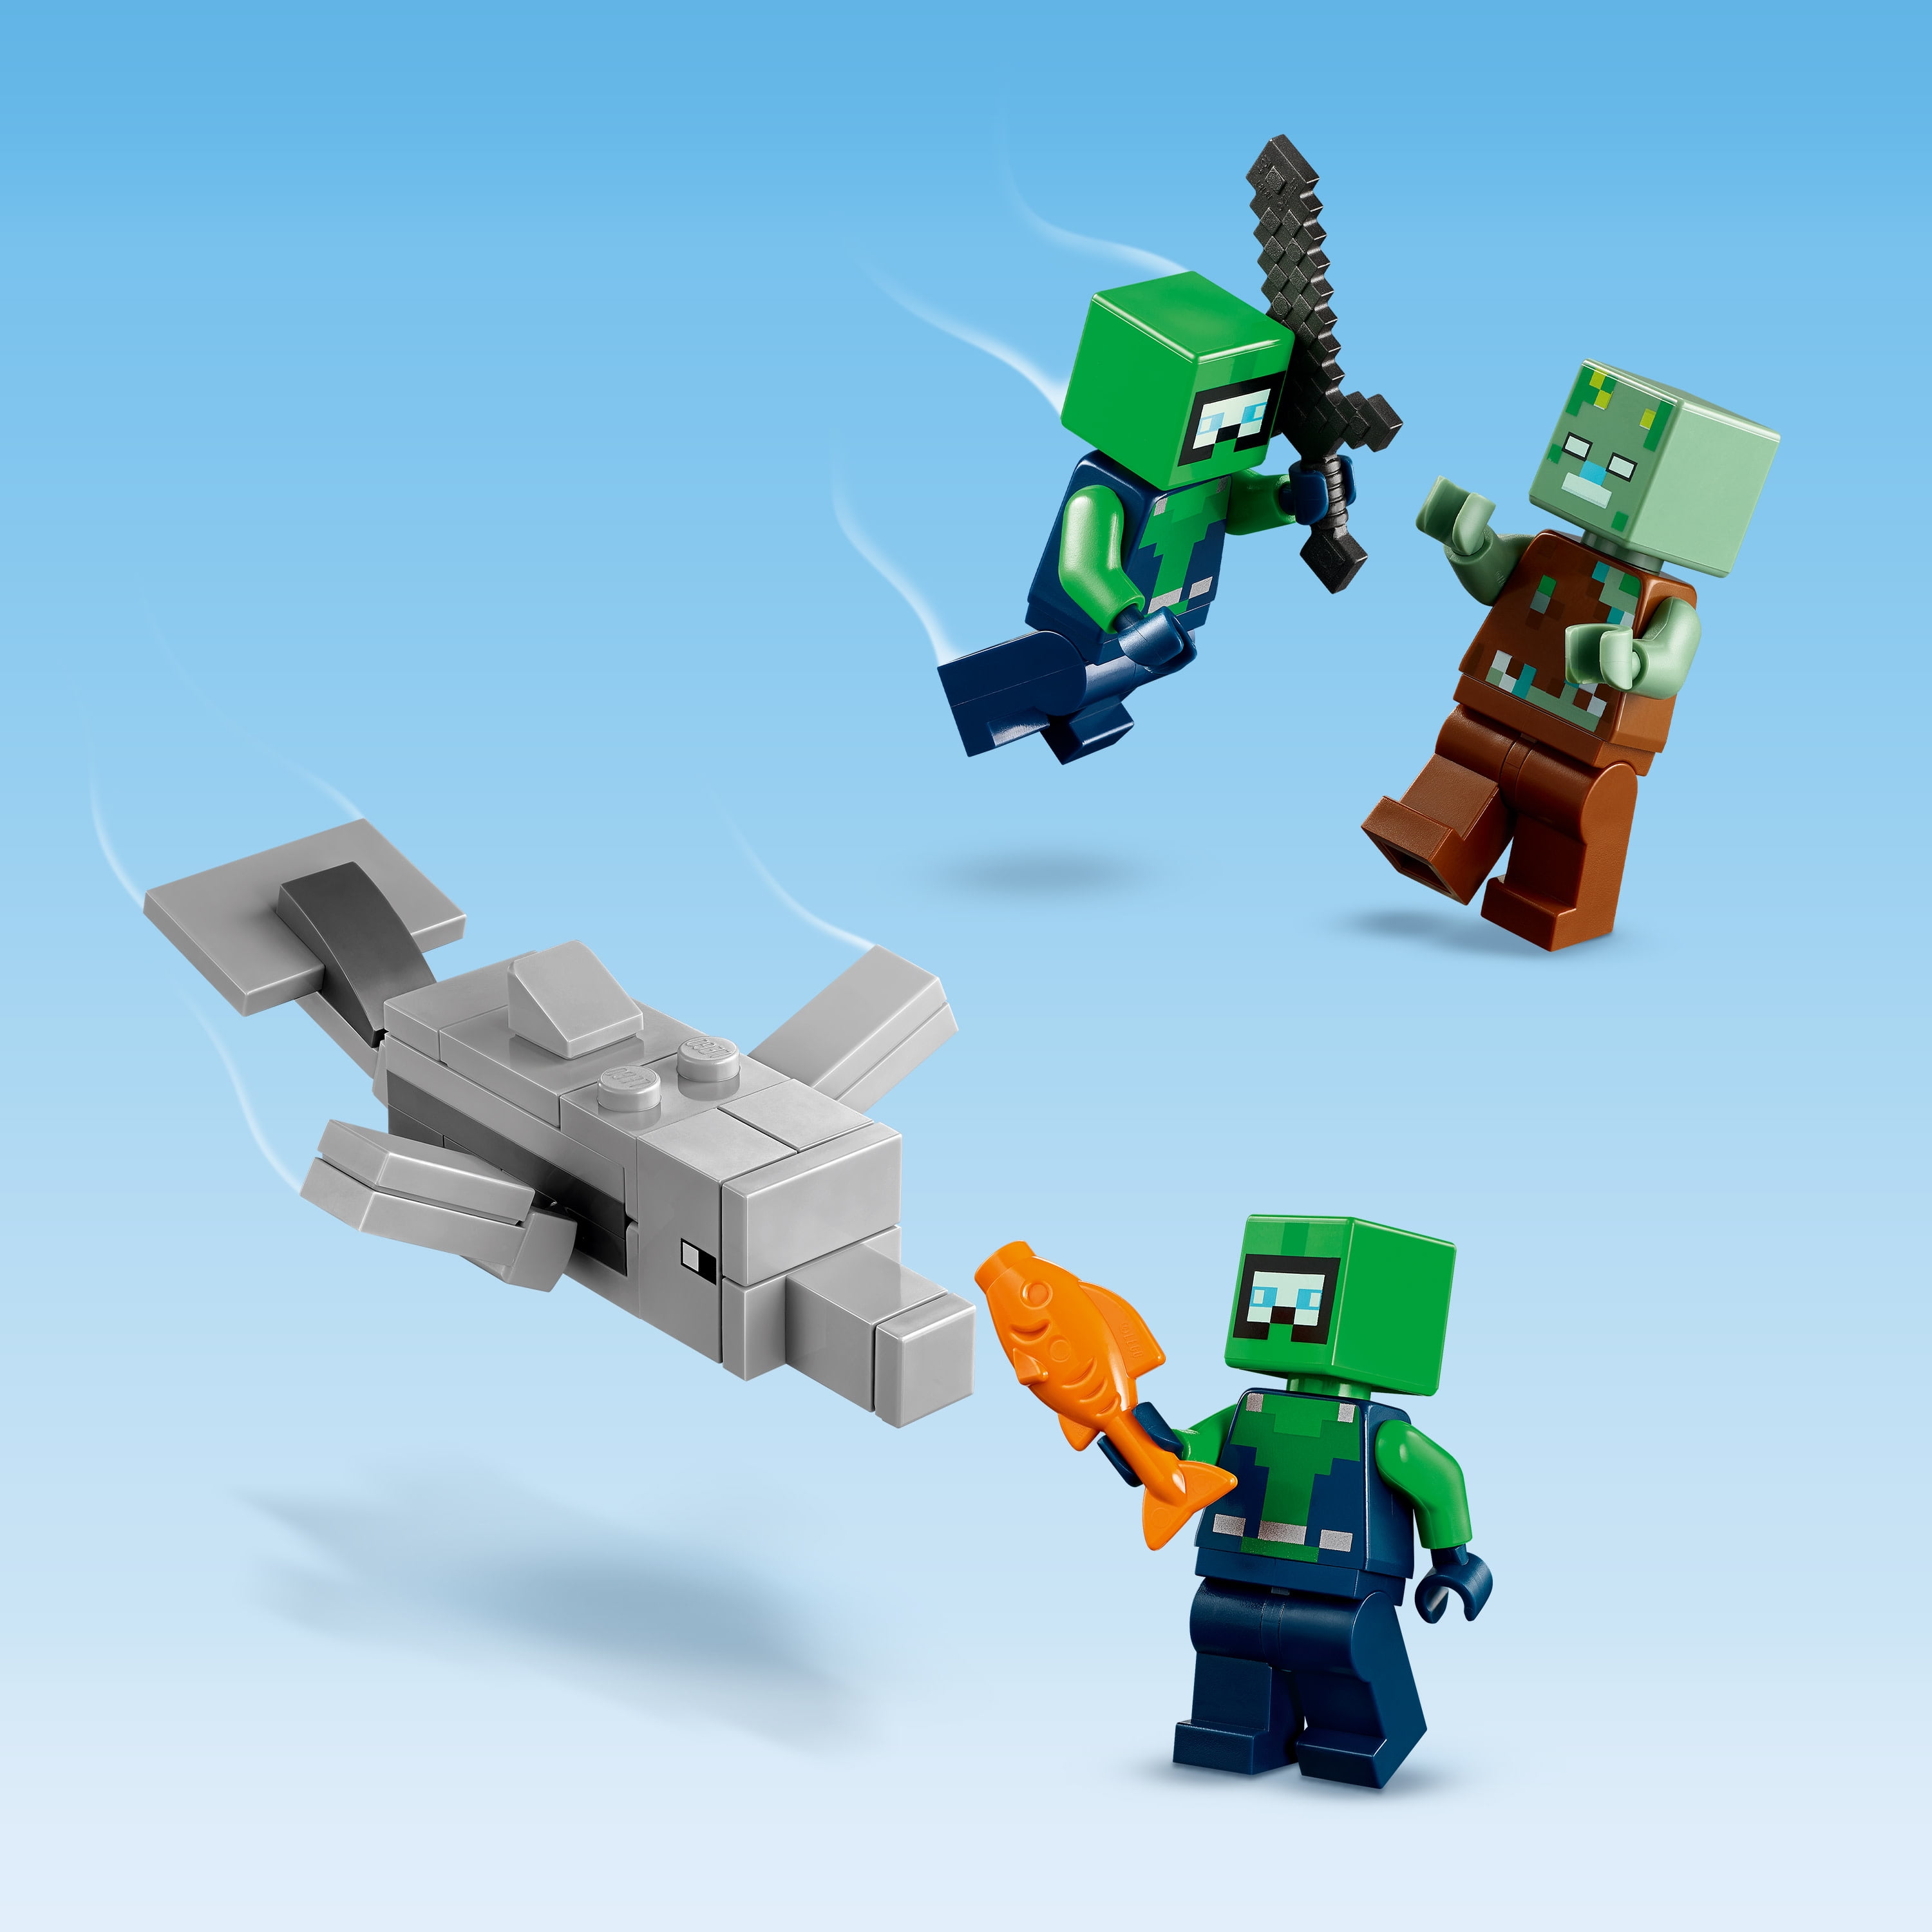 LEGO MOC Minecraft Village from 21121+21125+21132+21135 by sebbl